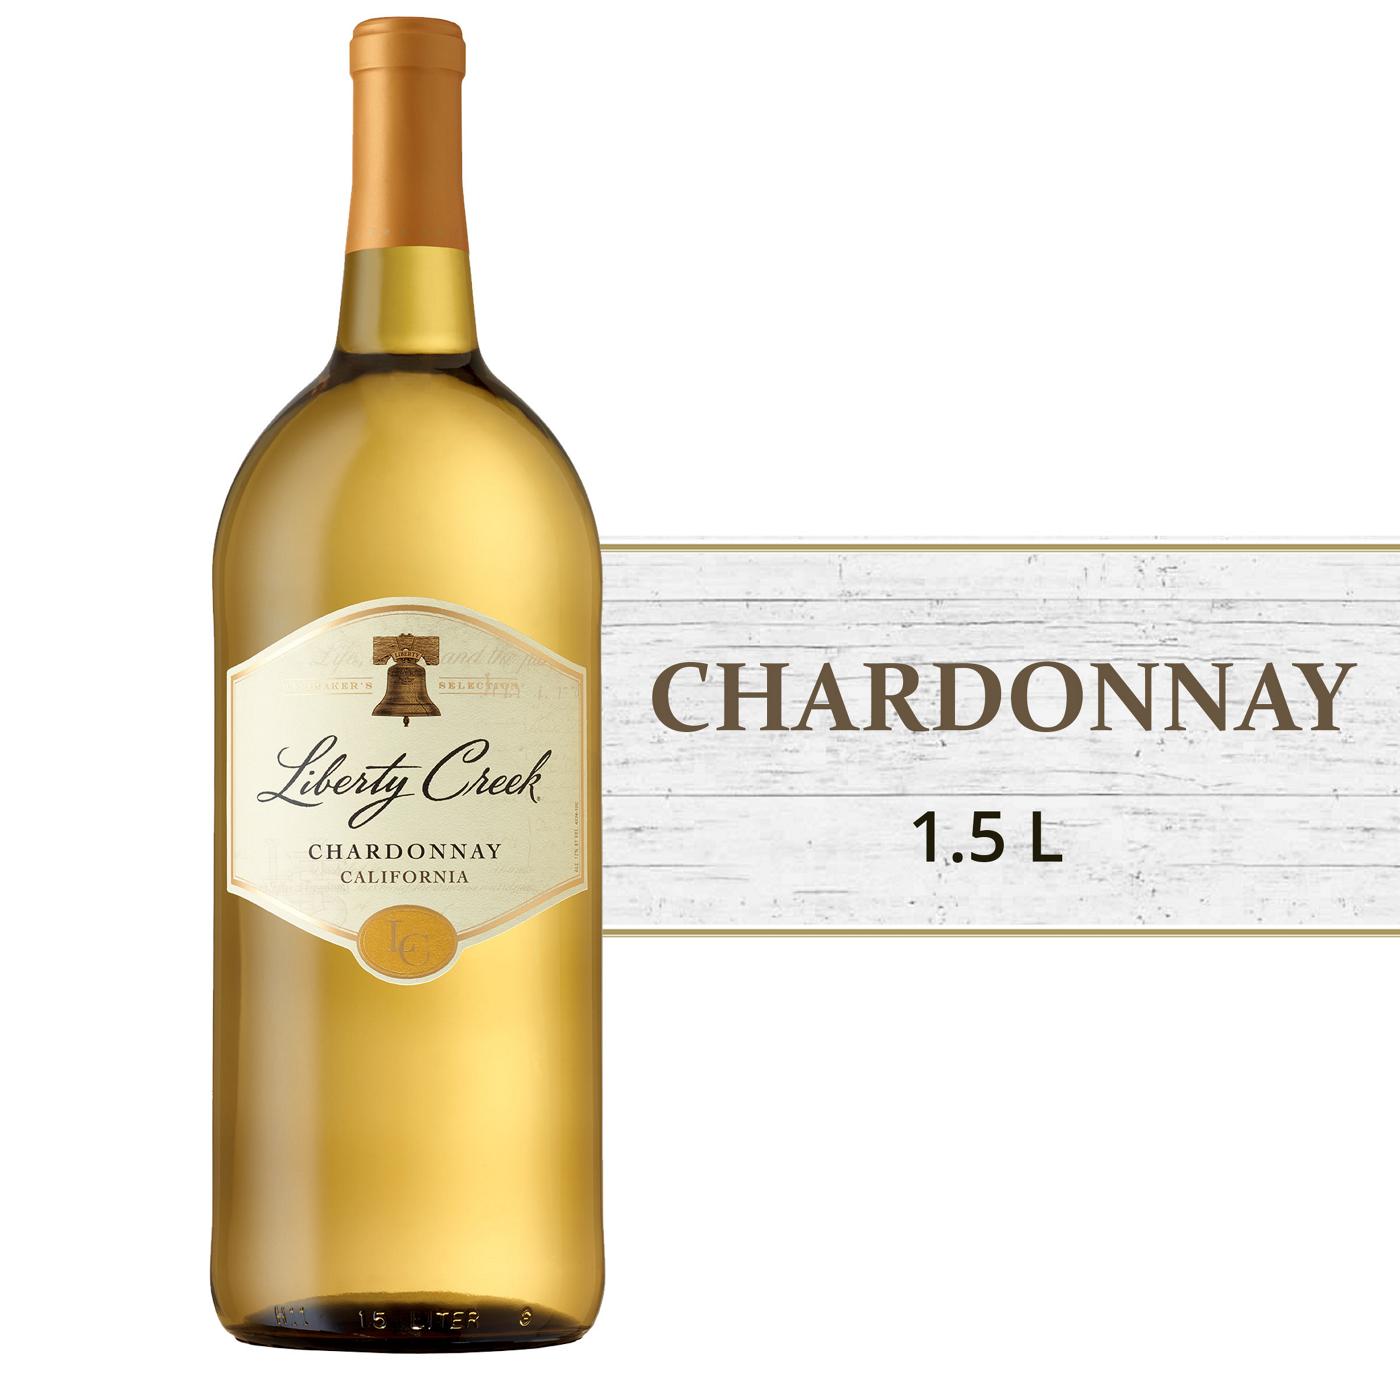 Liberty Creek Chardonnay; image 4 of 5